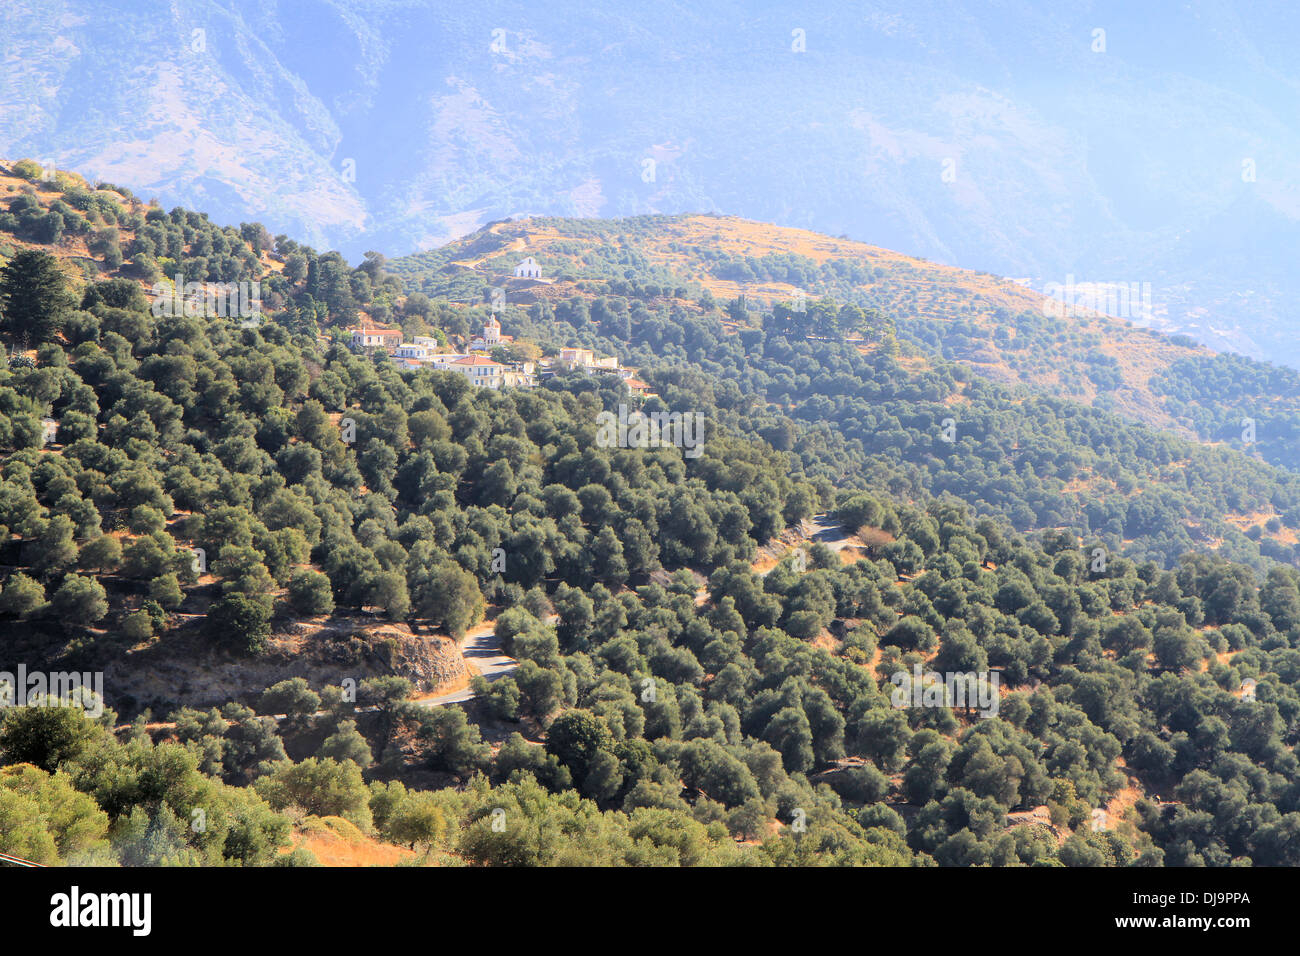 Cretan village nestled among the hills, Crete, Greece Stock Photo